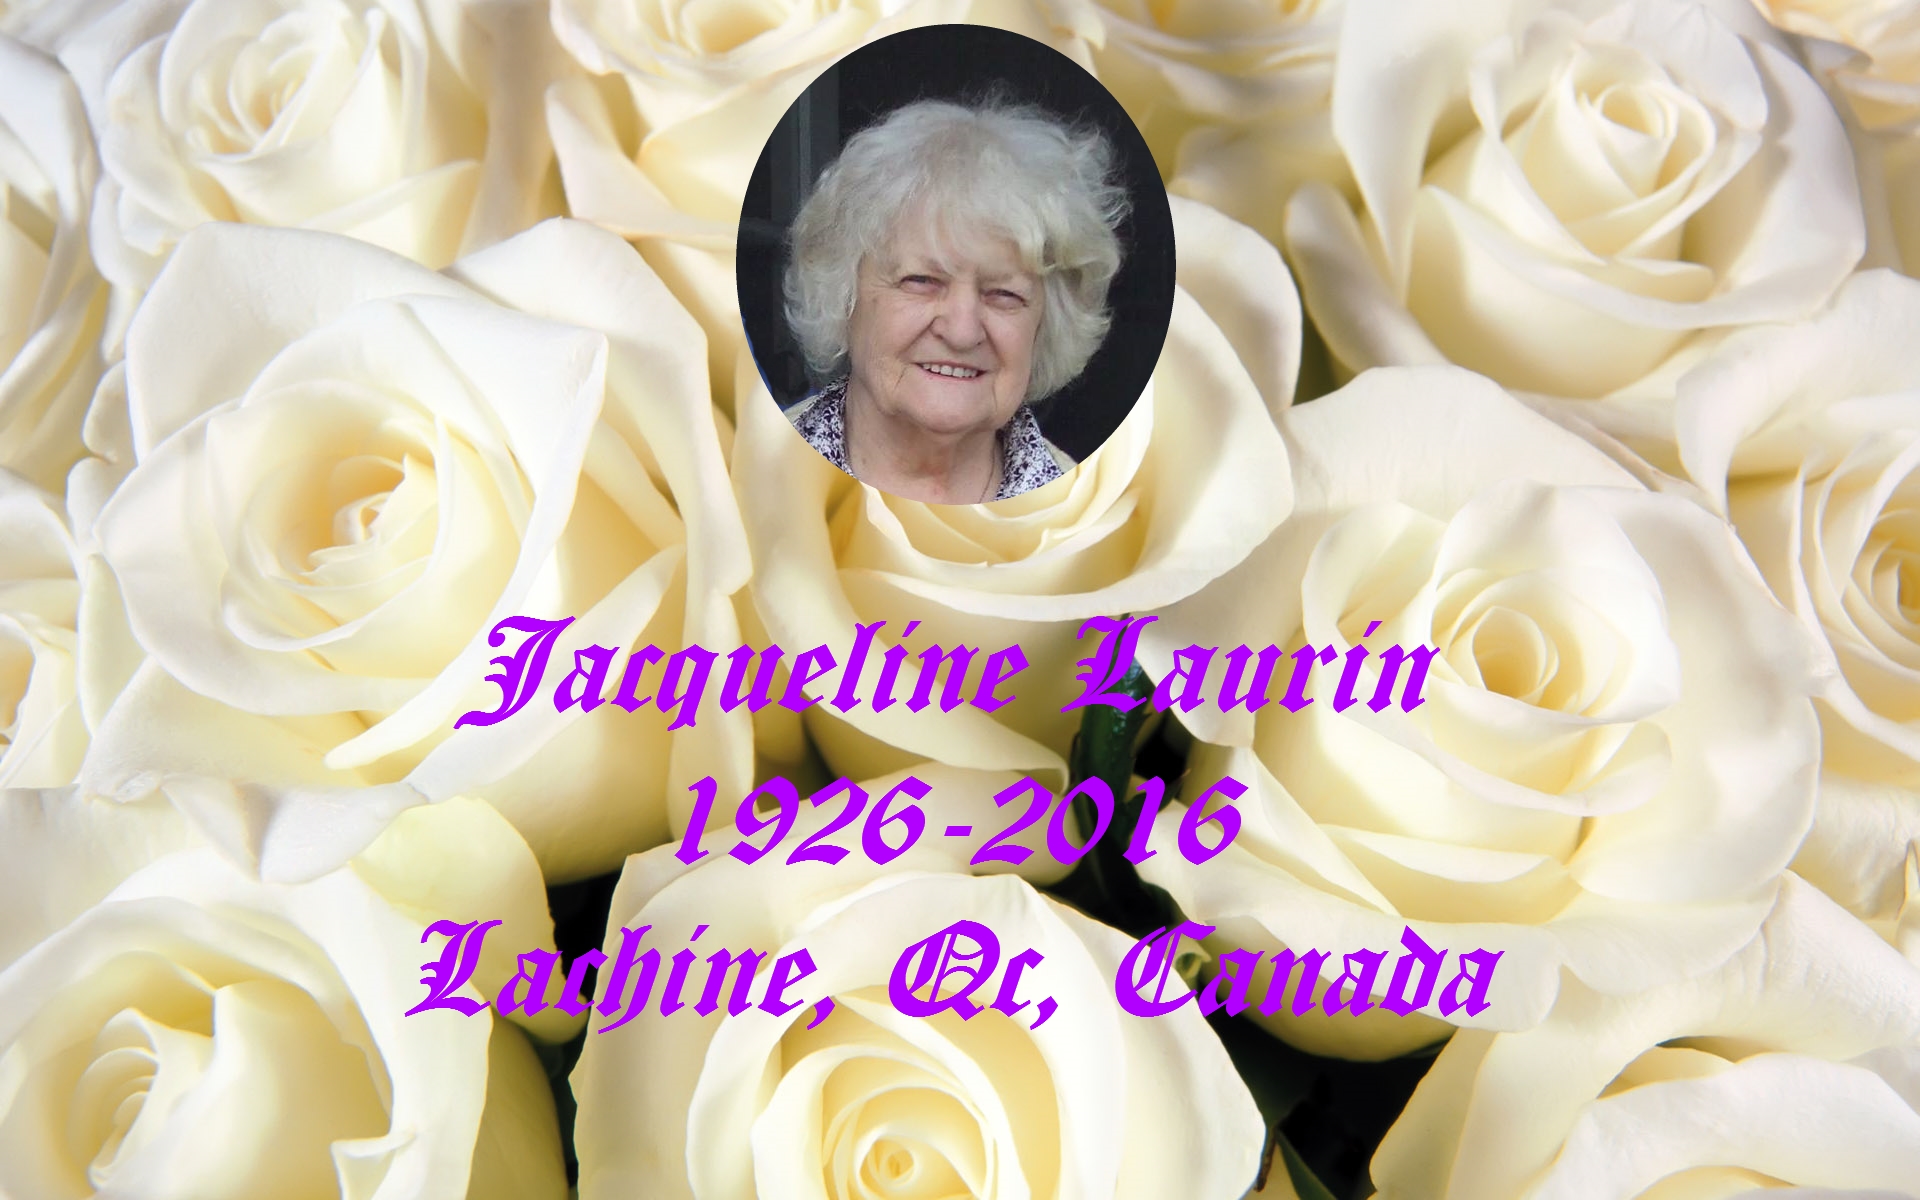 Jacqueline laurin 1926 2016